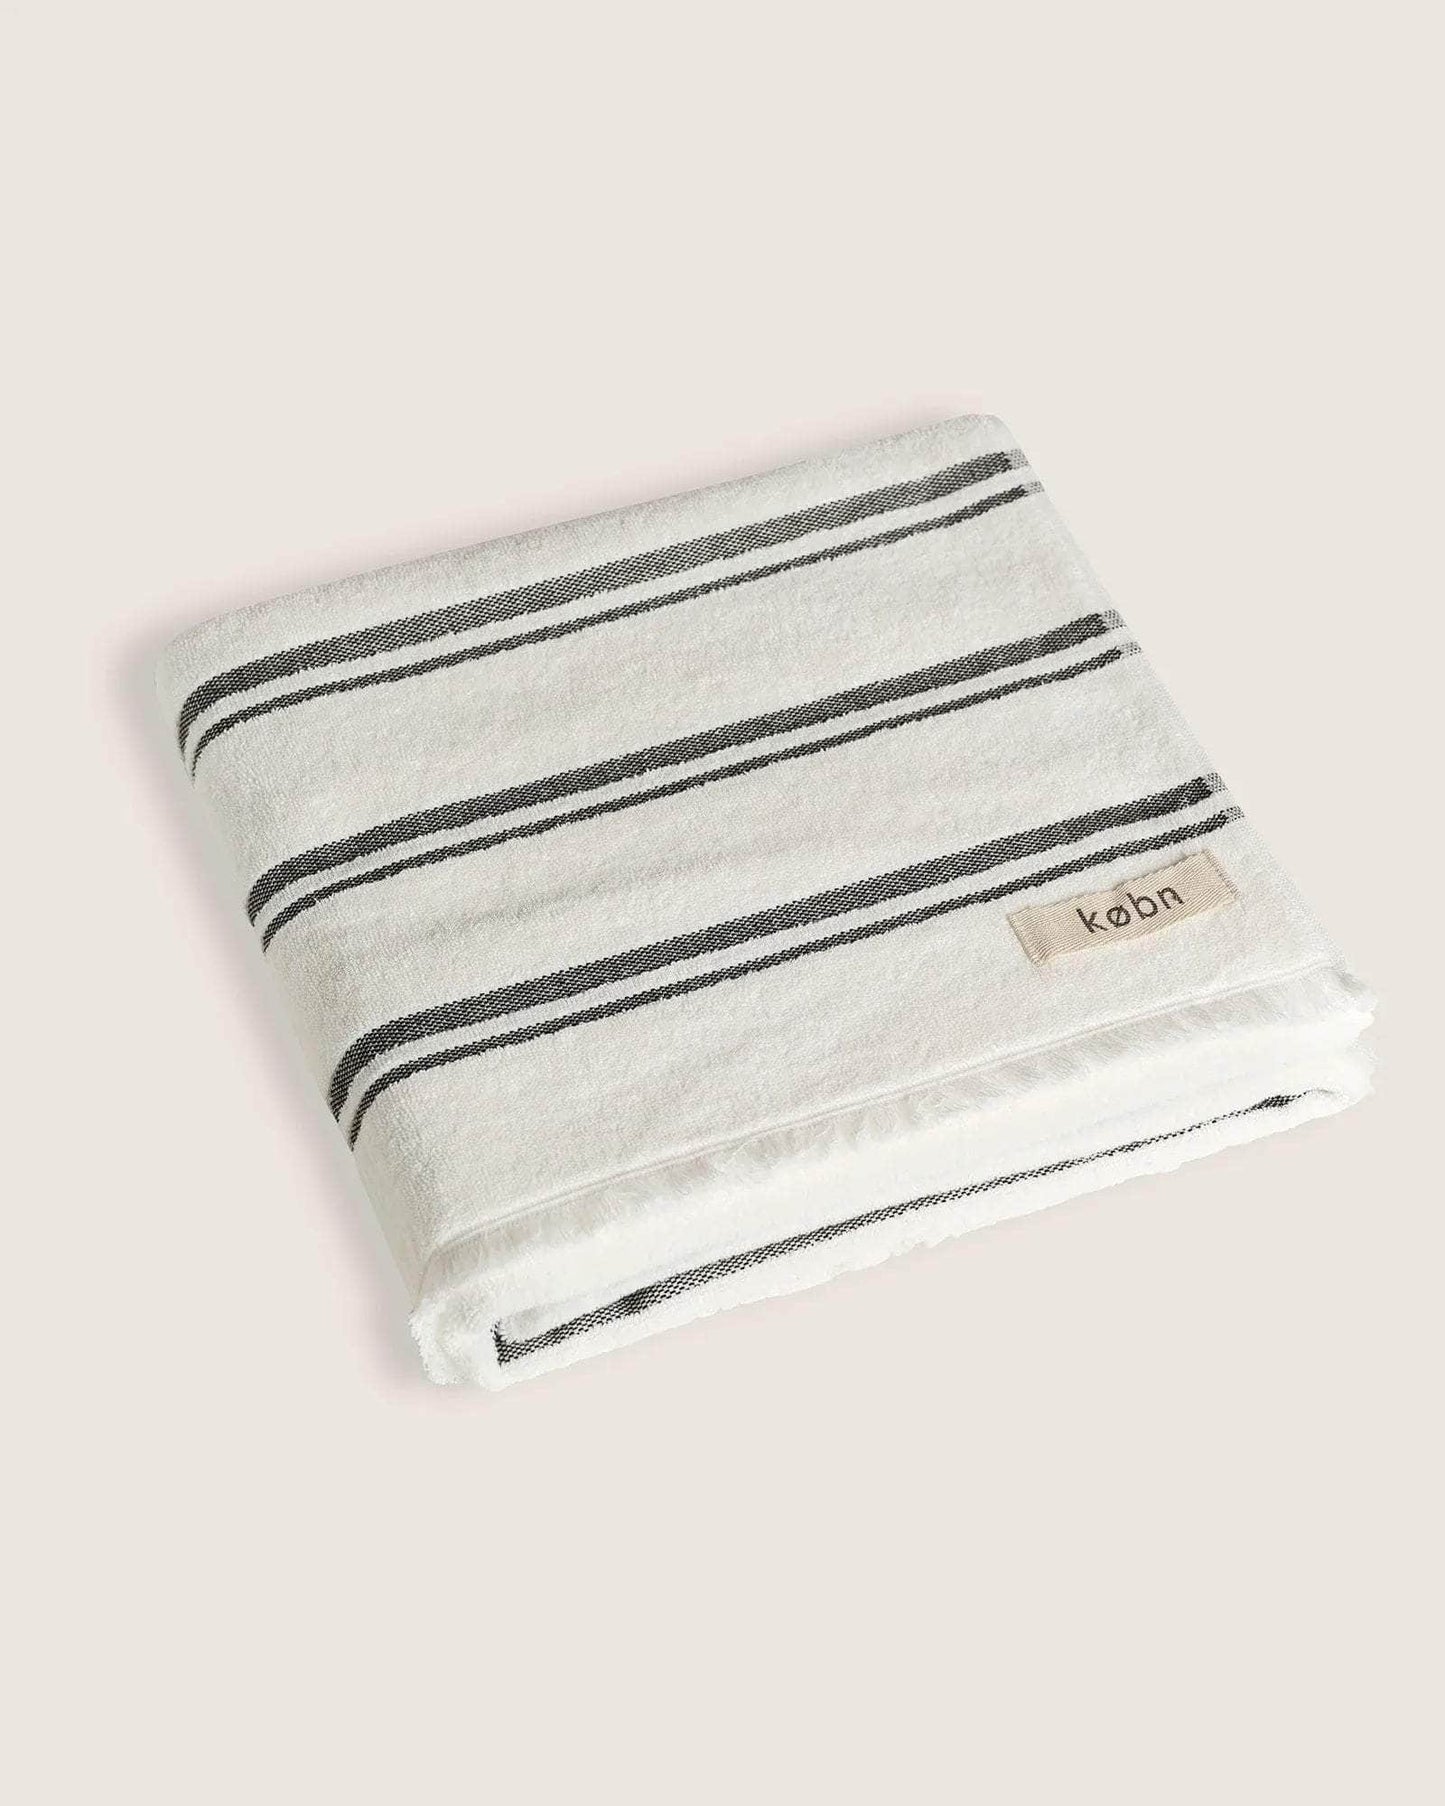 Købn Crema  Towel *ON SALE FOR A LIMITED TIME*